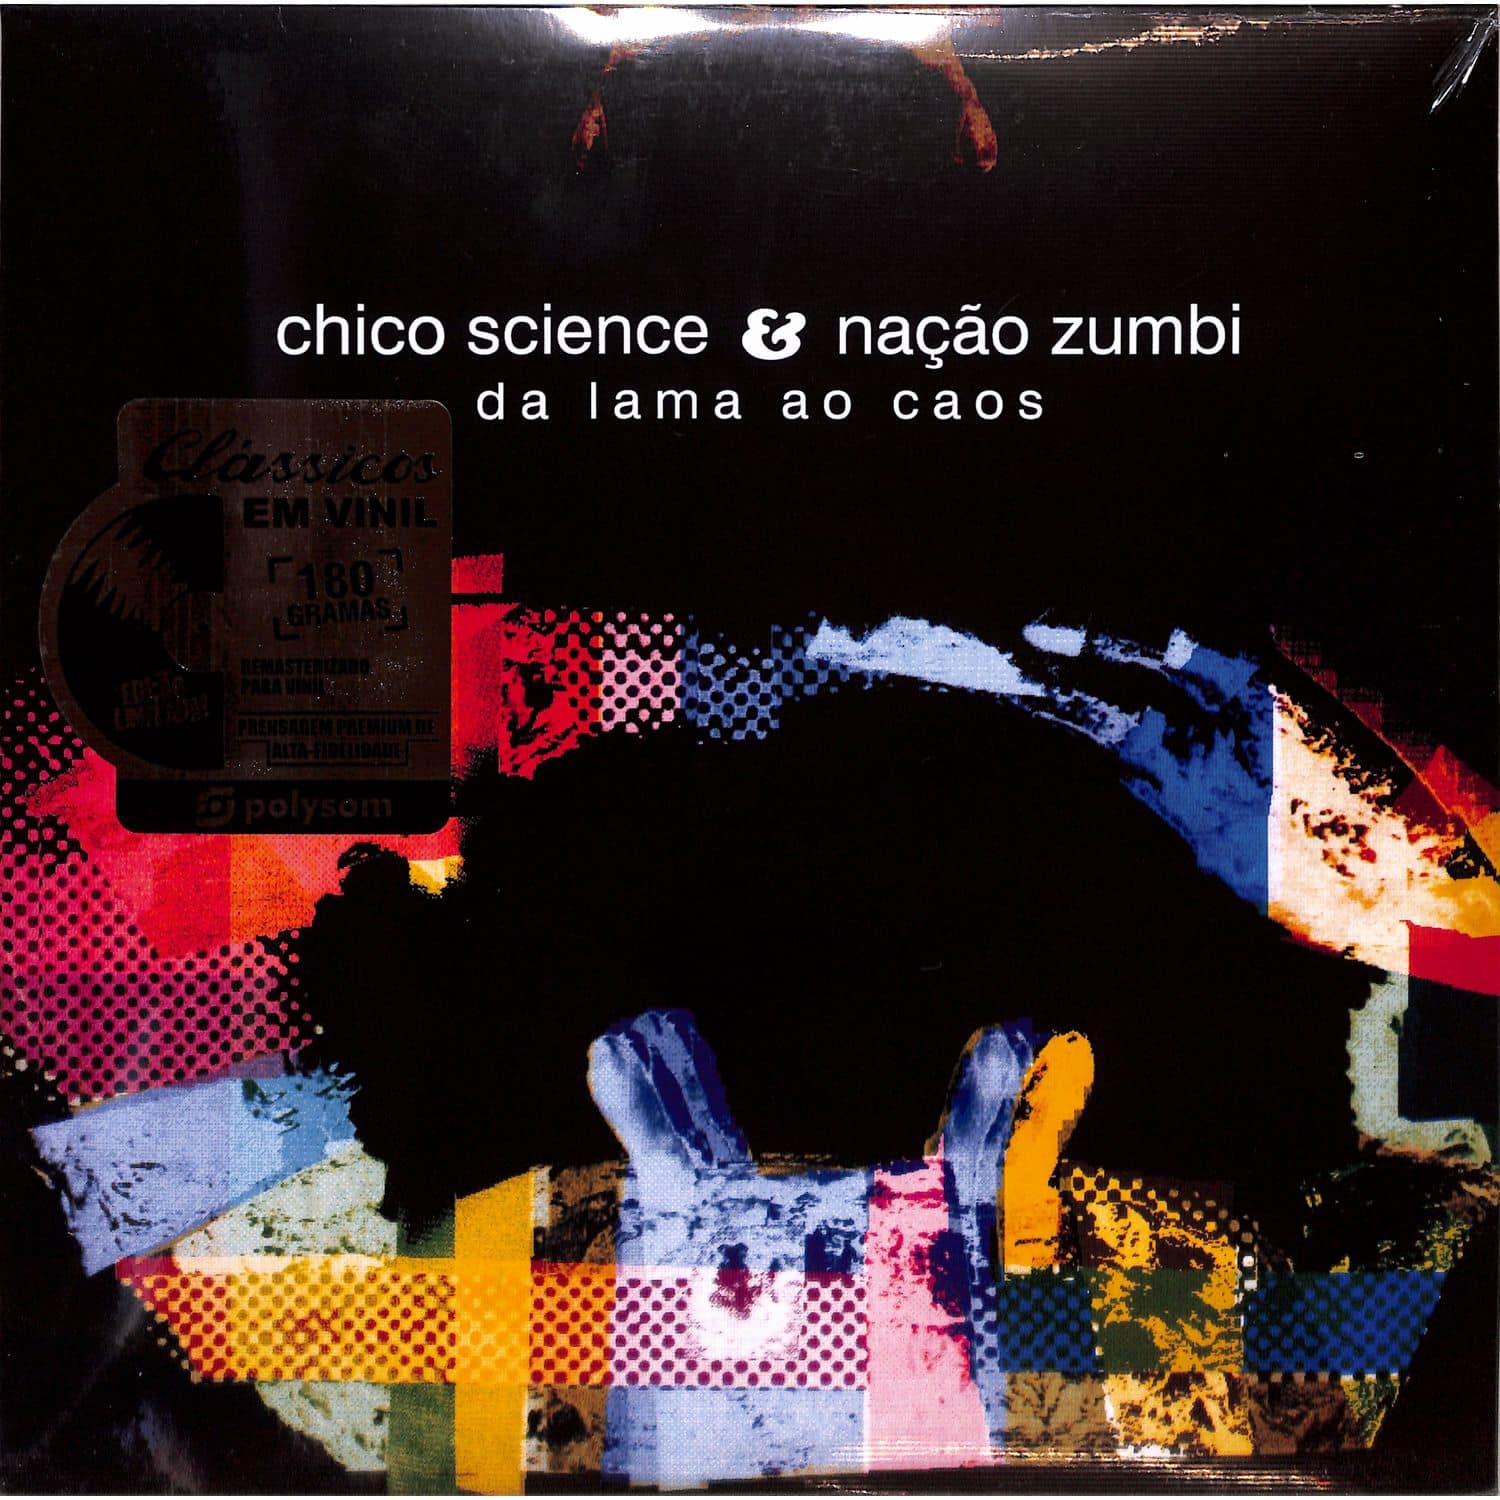 Chico Science & Nacao Zumbi - DA LAMA AO CAOS 